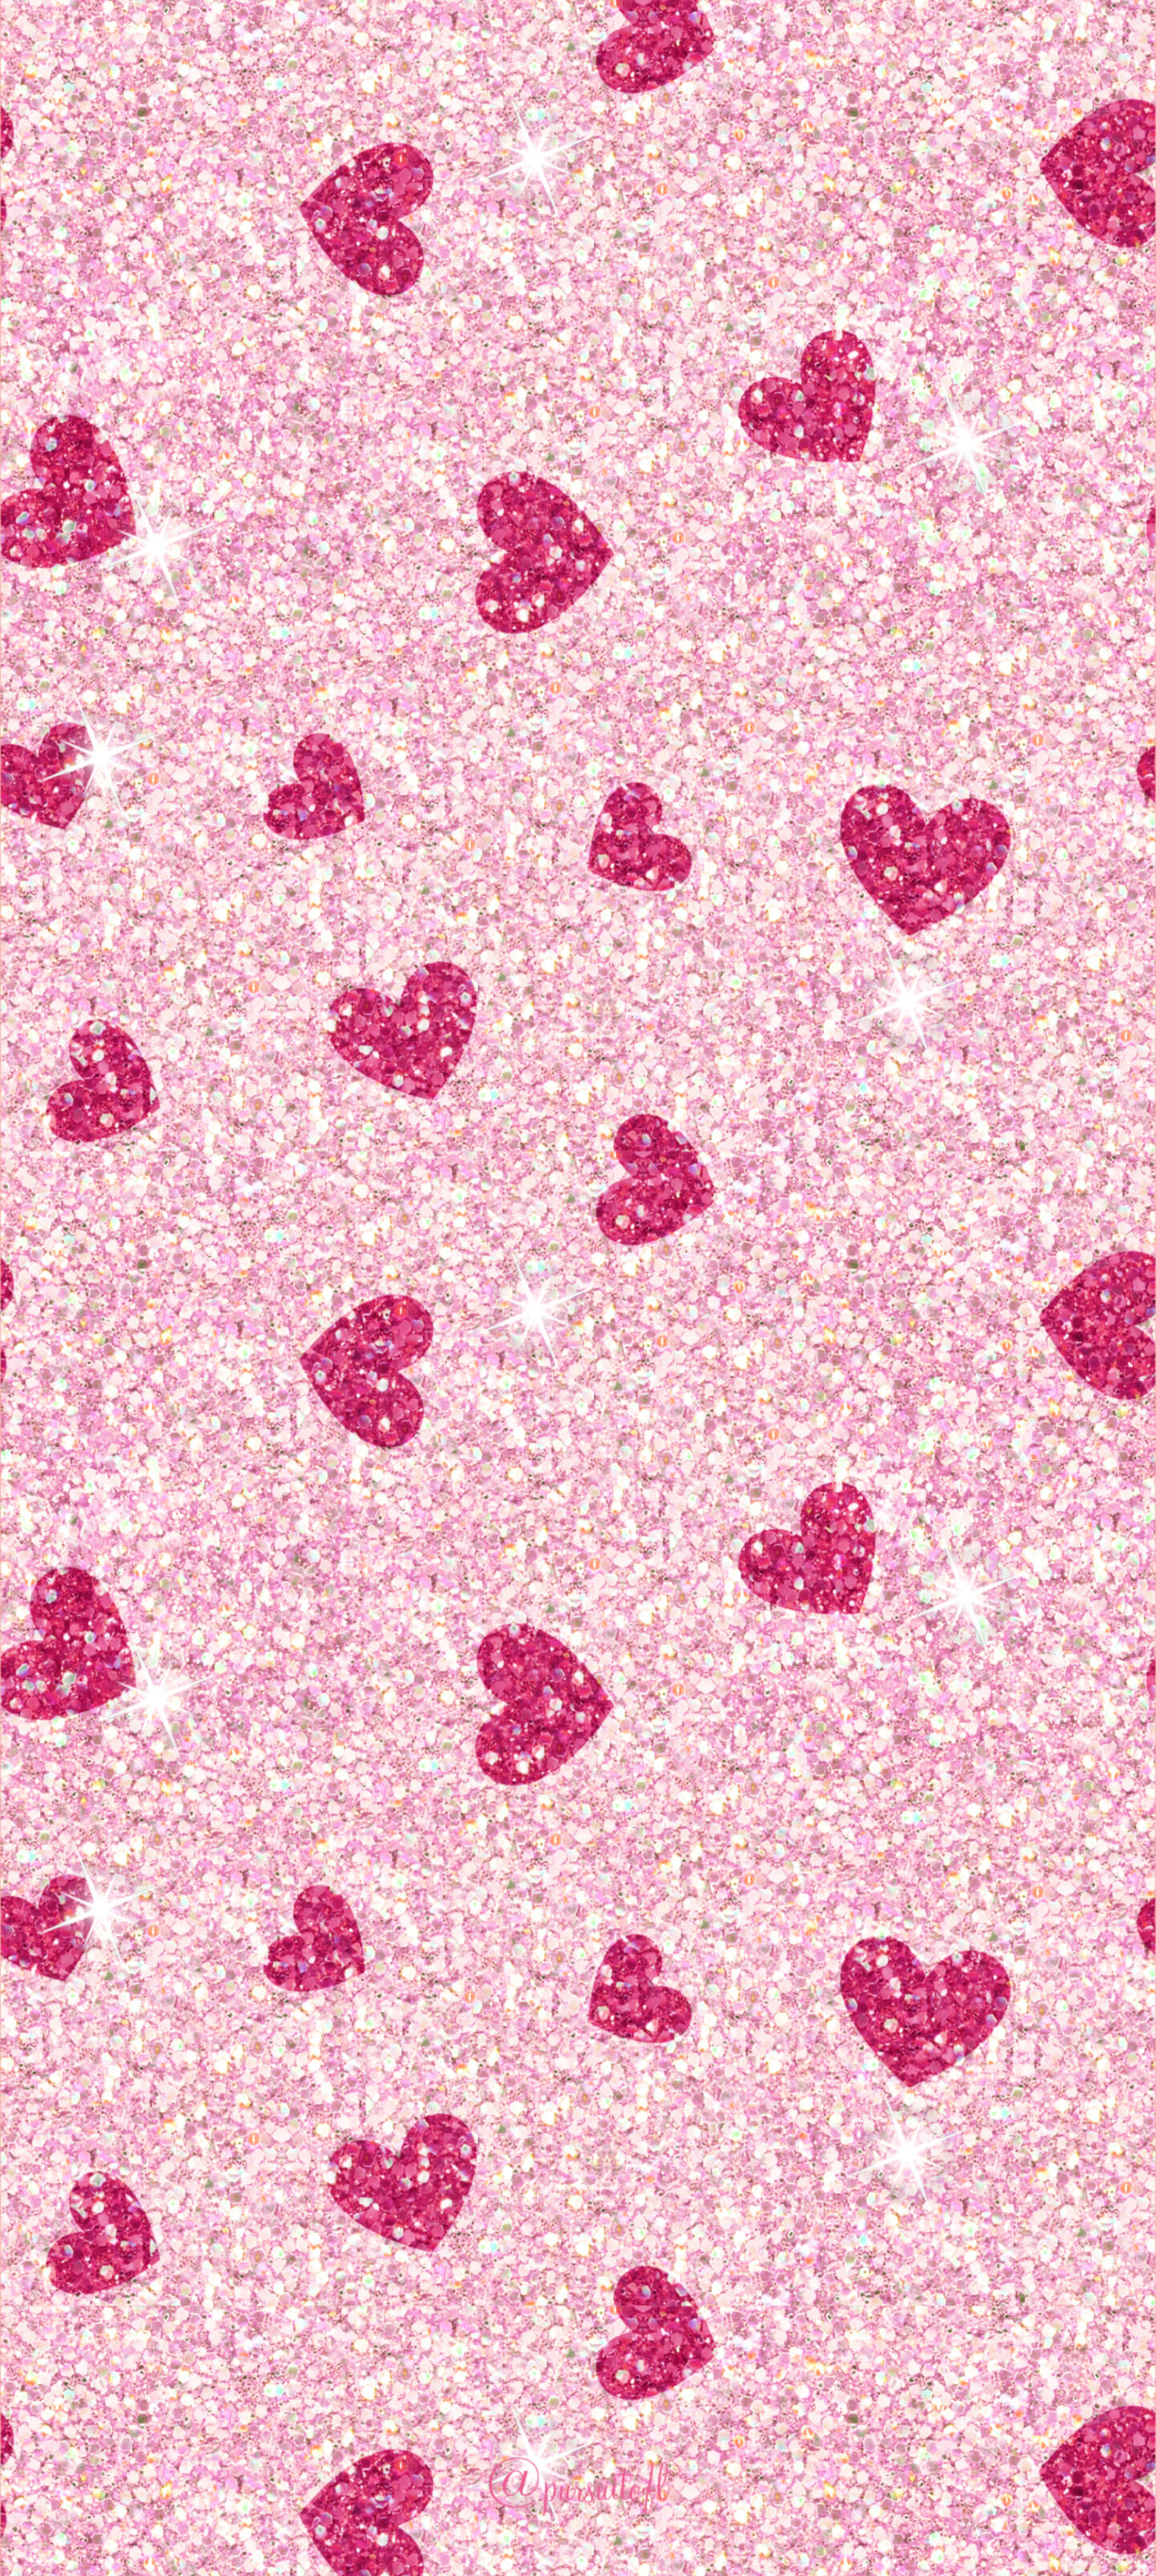 Light Pink Glitter Phone Wallpaper with Dark Pink Glitter Hearts; Valentine's Day Wallpaper